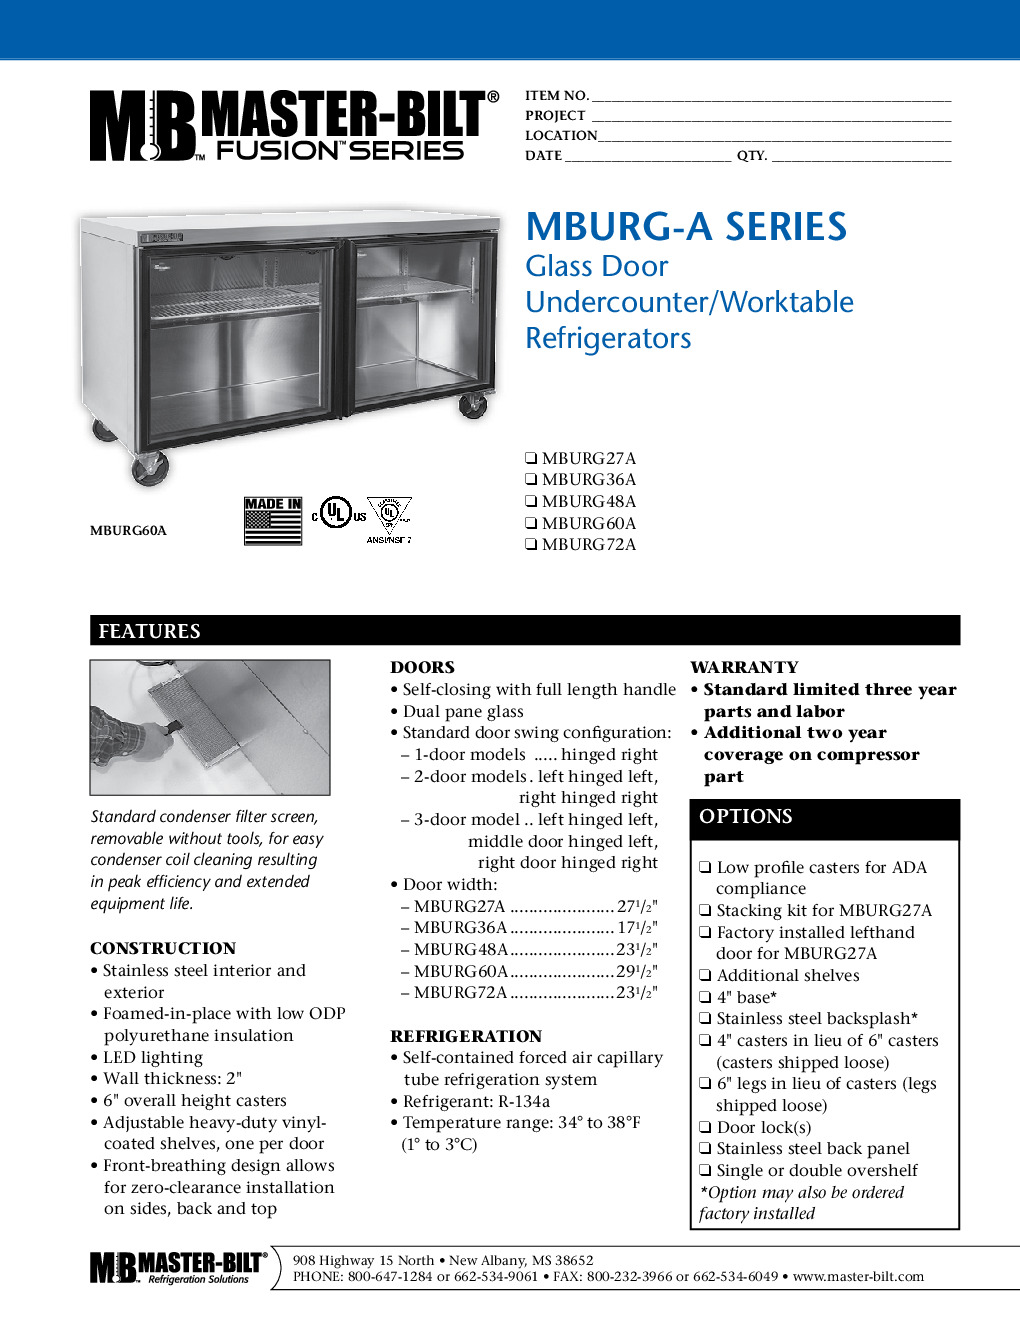 Master-Bilt MBURG48A Reach-In Undercounter Refrigerator